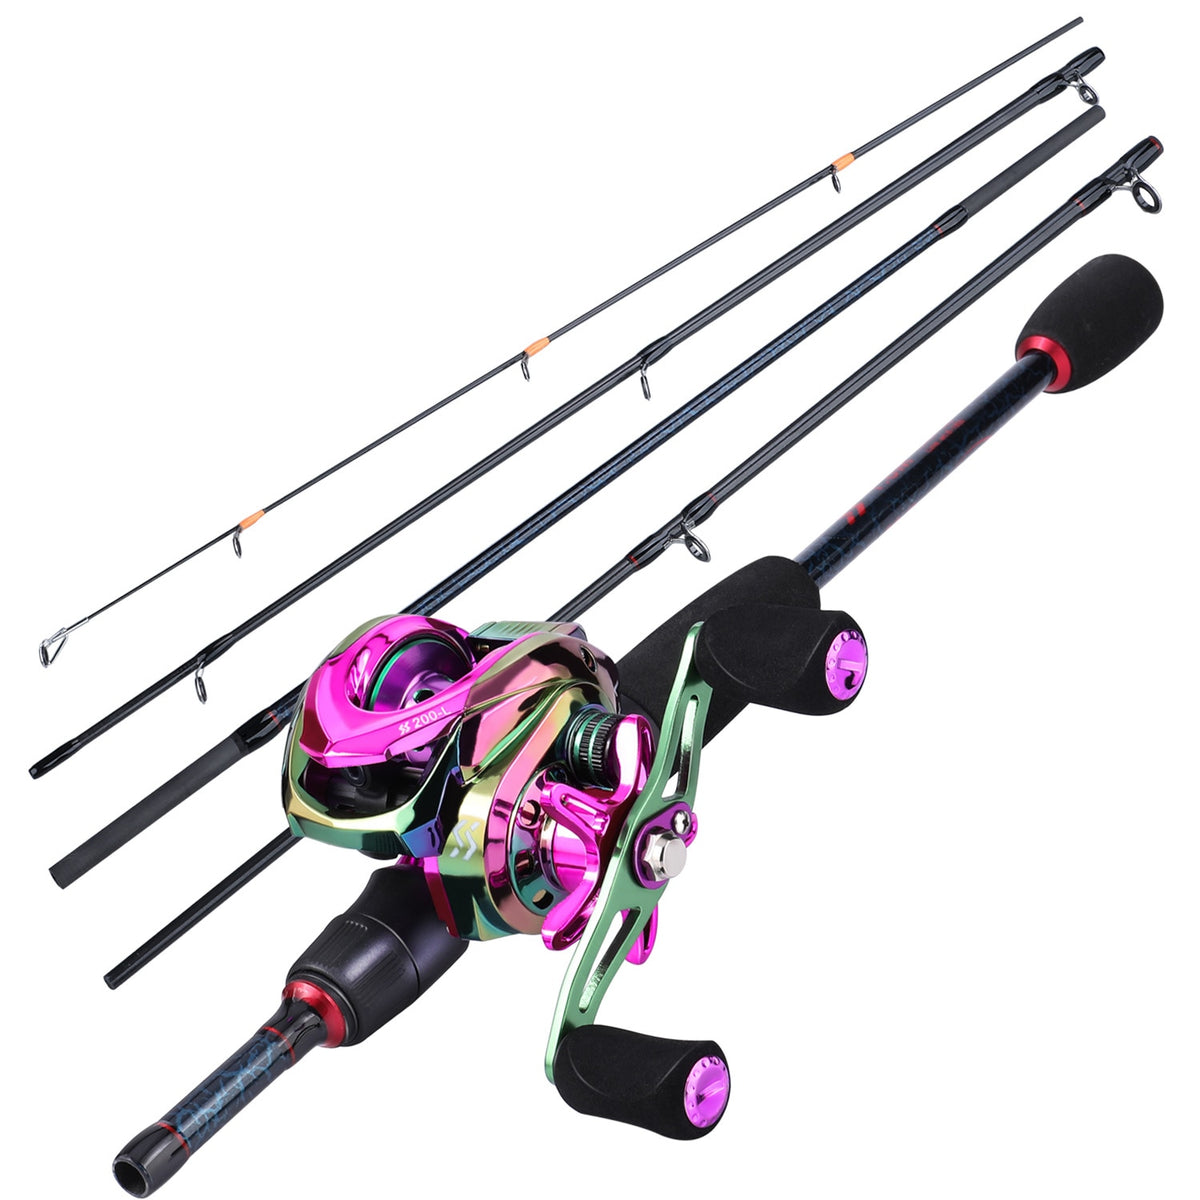 Sougayilang Fishing Rod and Reel Set 5 Section Carbon Rod Baitcasting